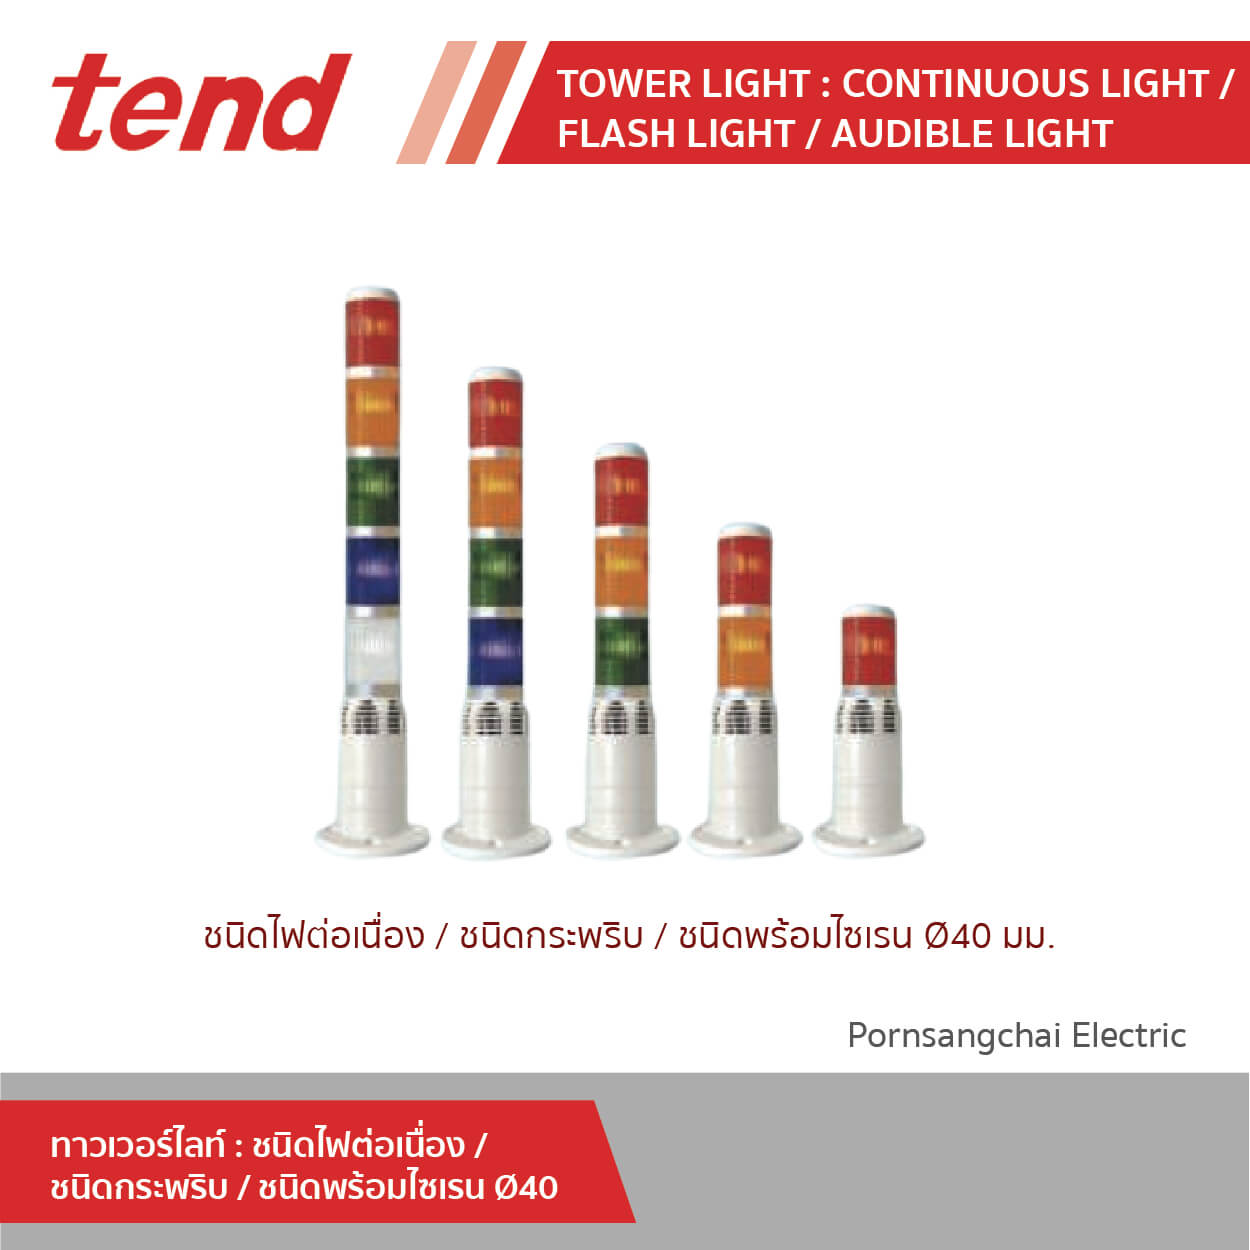 tend Tower Light : Continuous Light / Flash Light / Audible Light